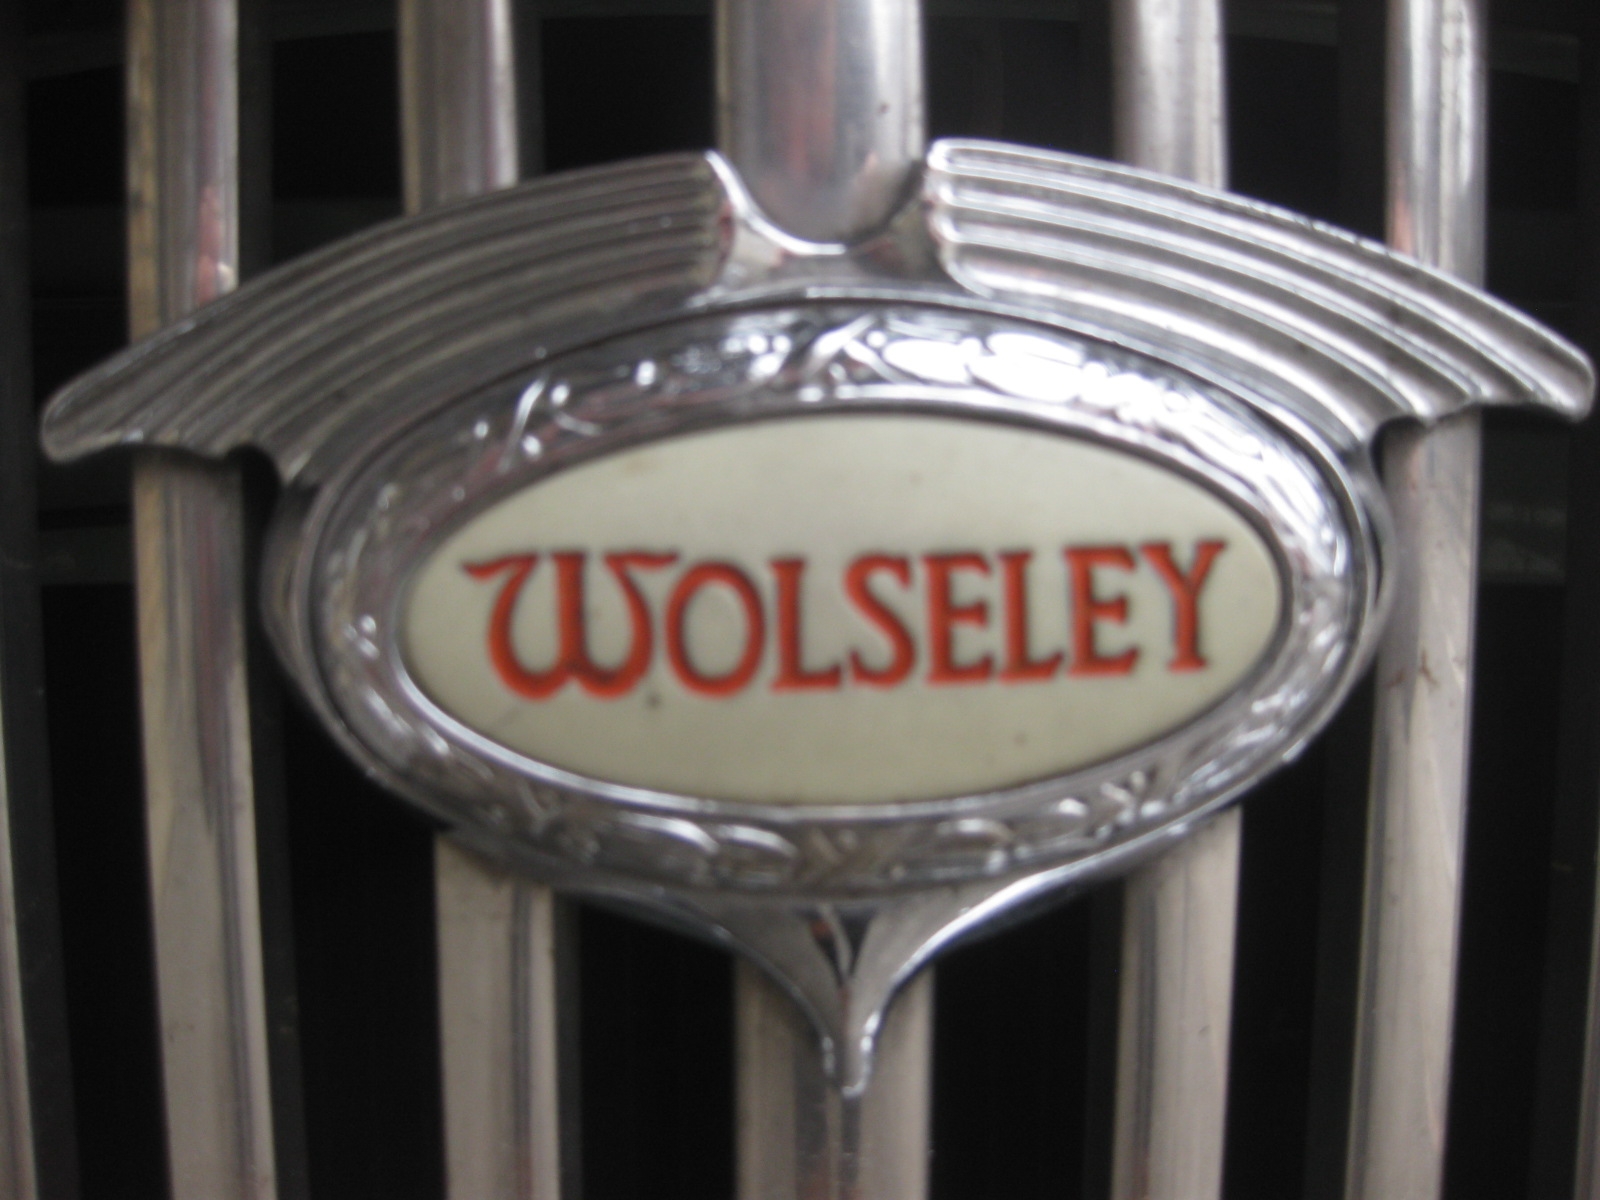 Wolseley 15/60 Limousine